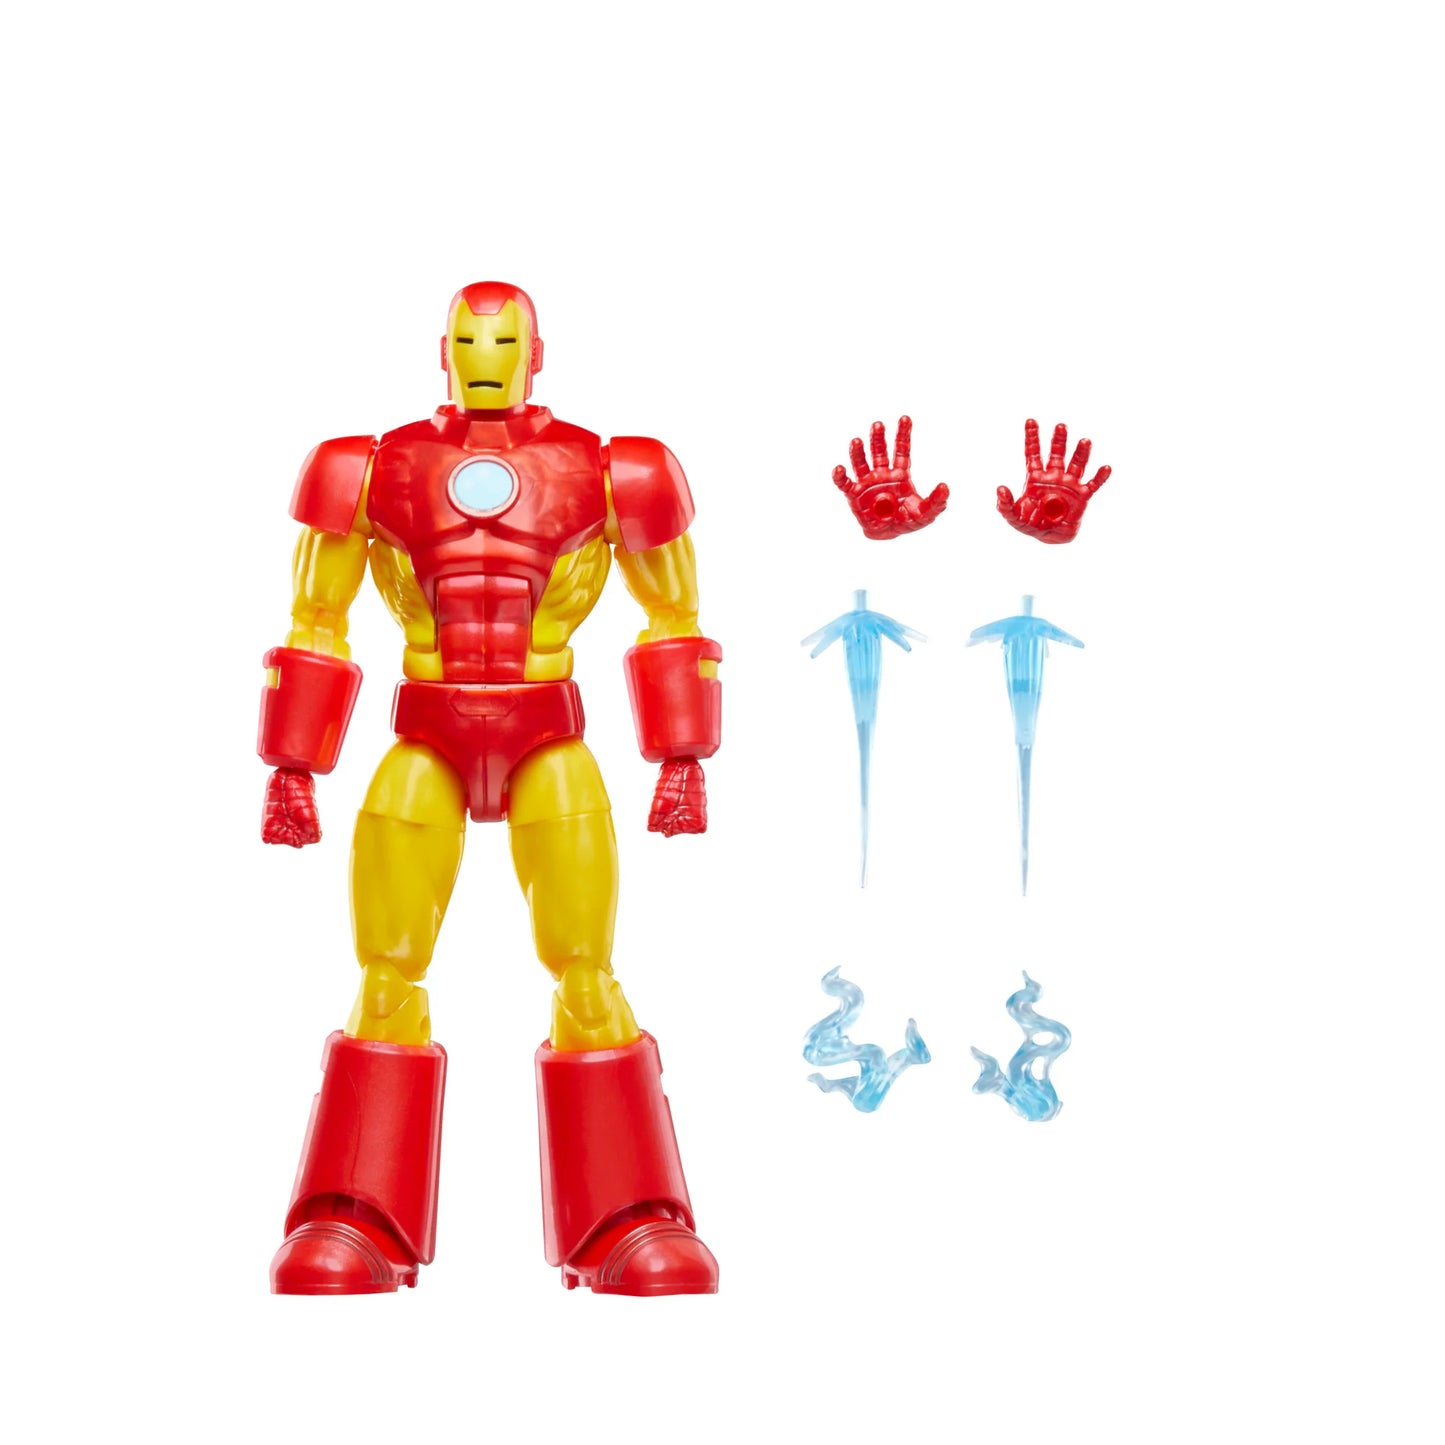 Marvel Legends Series Iron Man (Model 09) Action Figure Toy